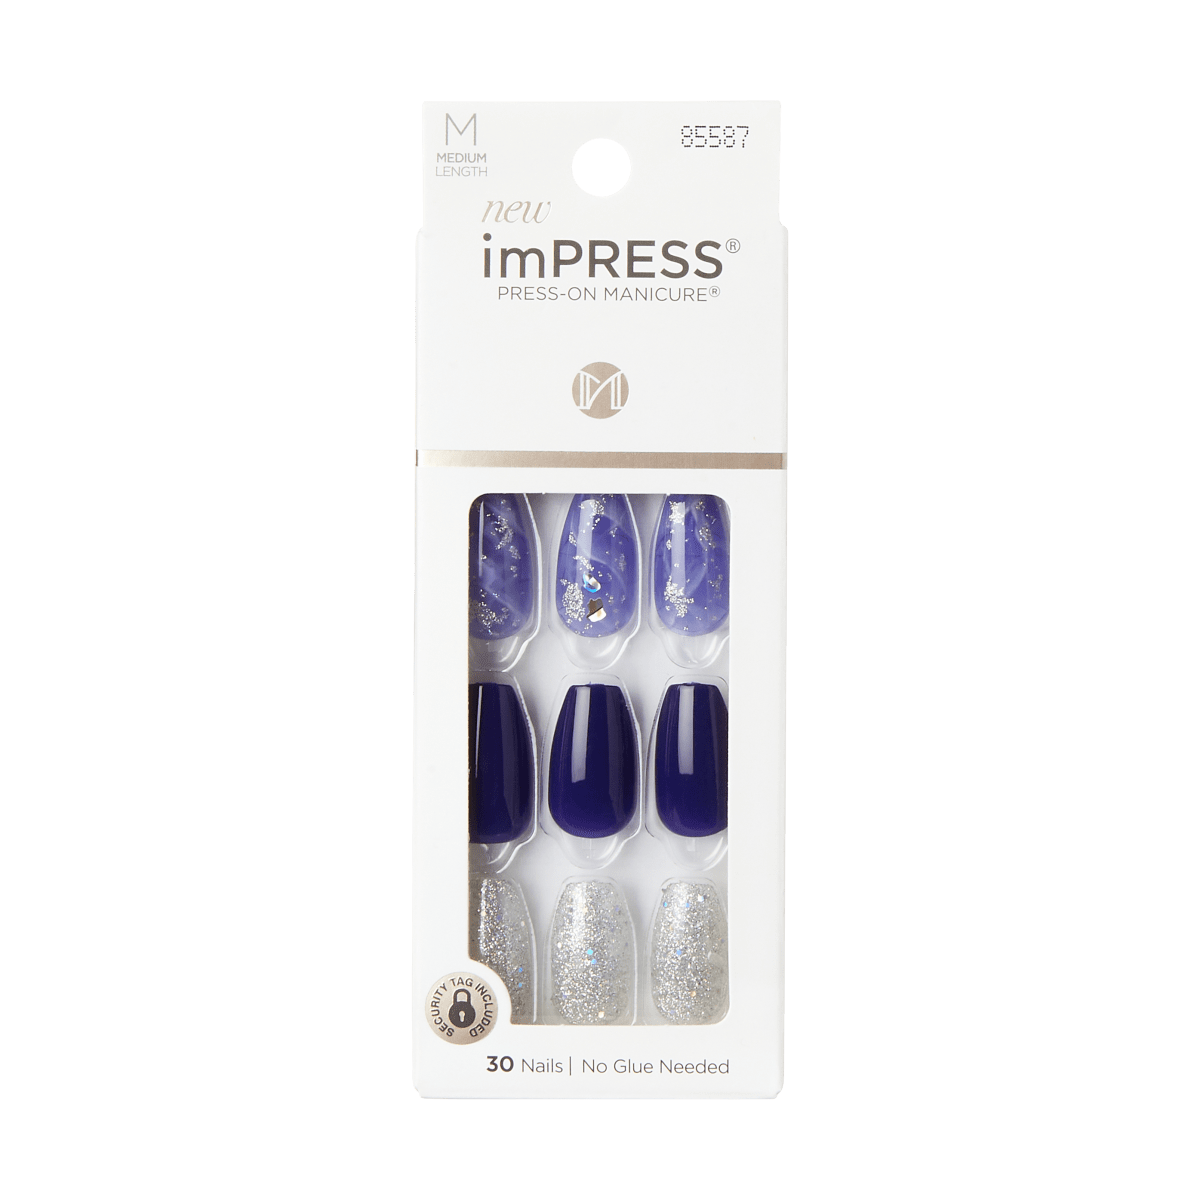 imPRESS Press-On Manicure - Polished